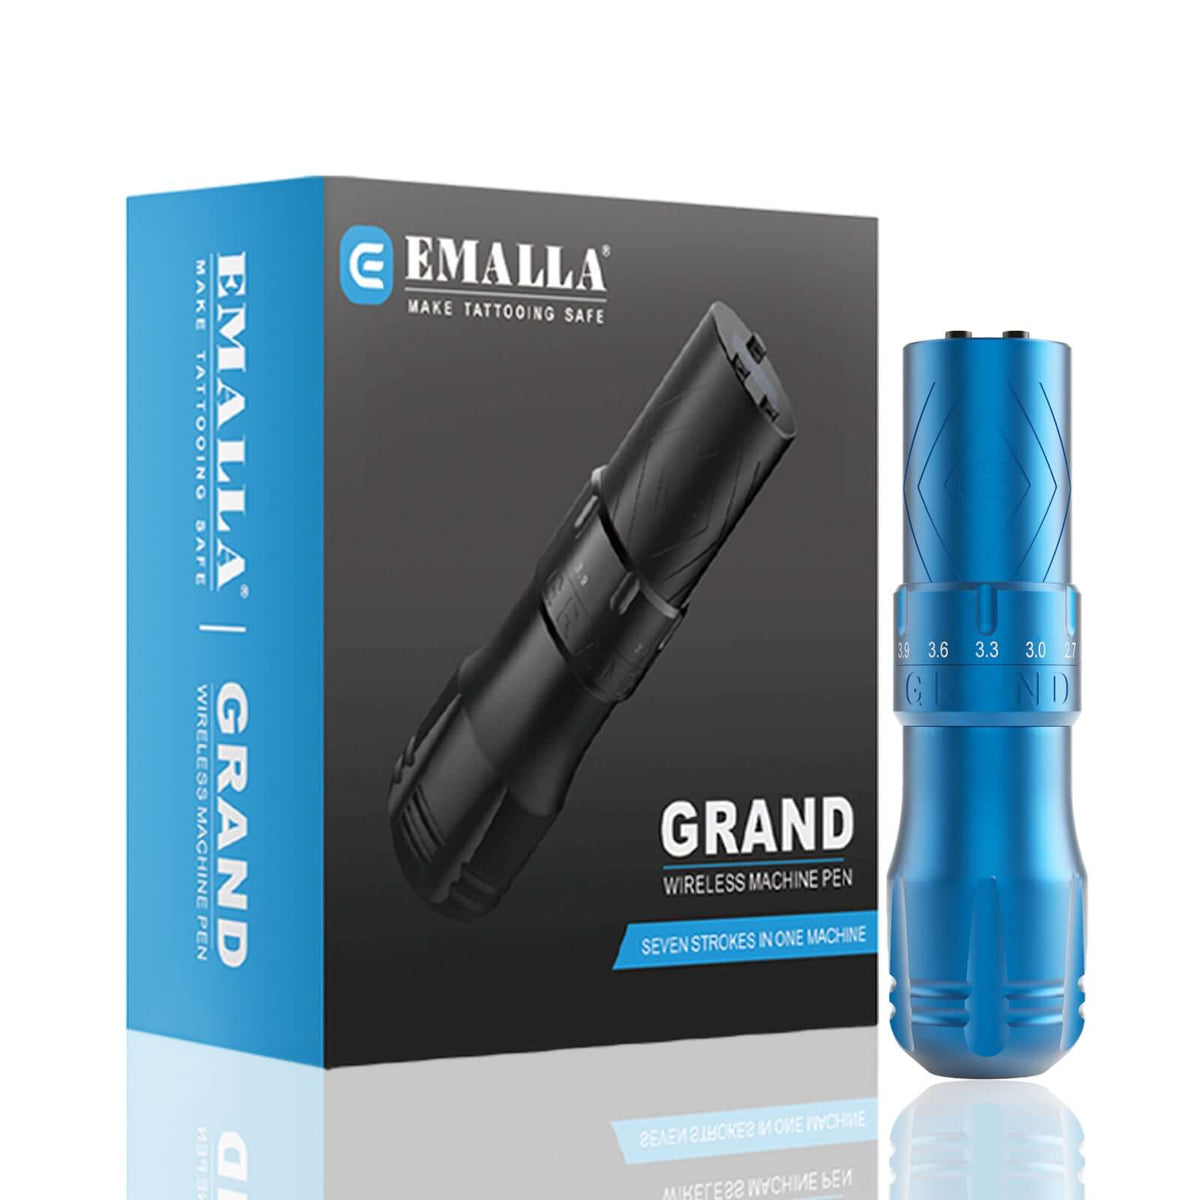 Package of EMALLA GRAND Wireless Tattoo Pen Machine (Blue)